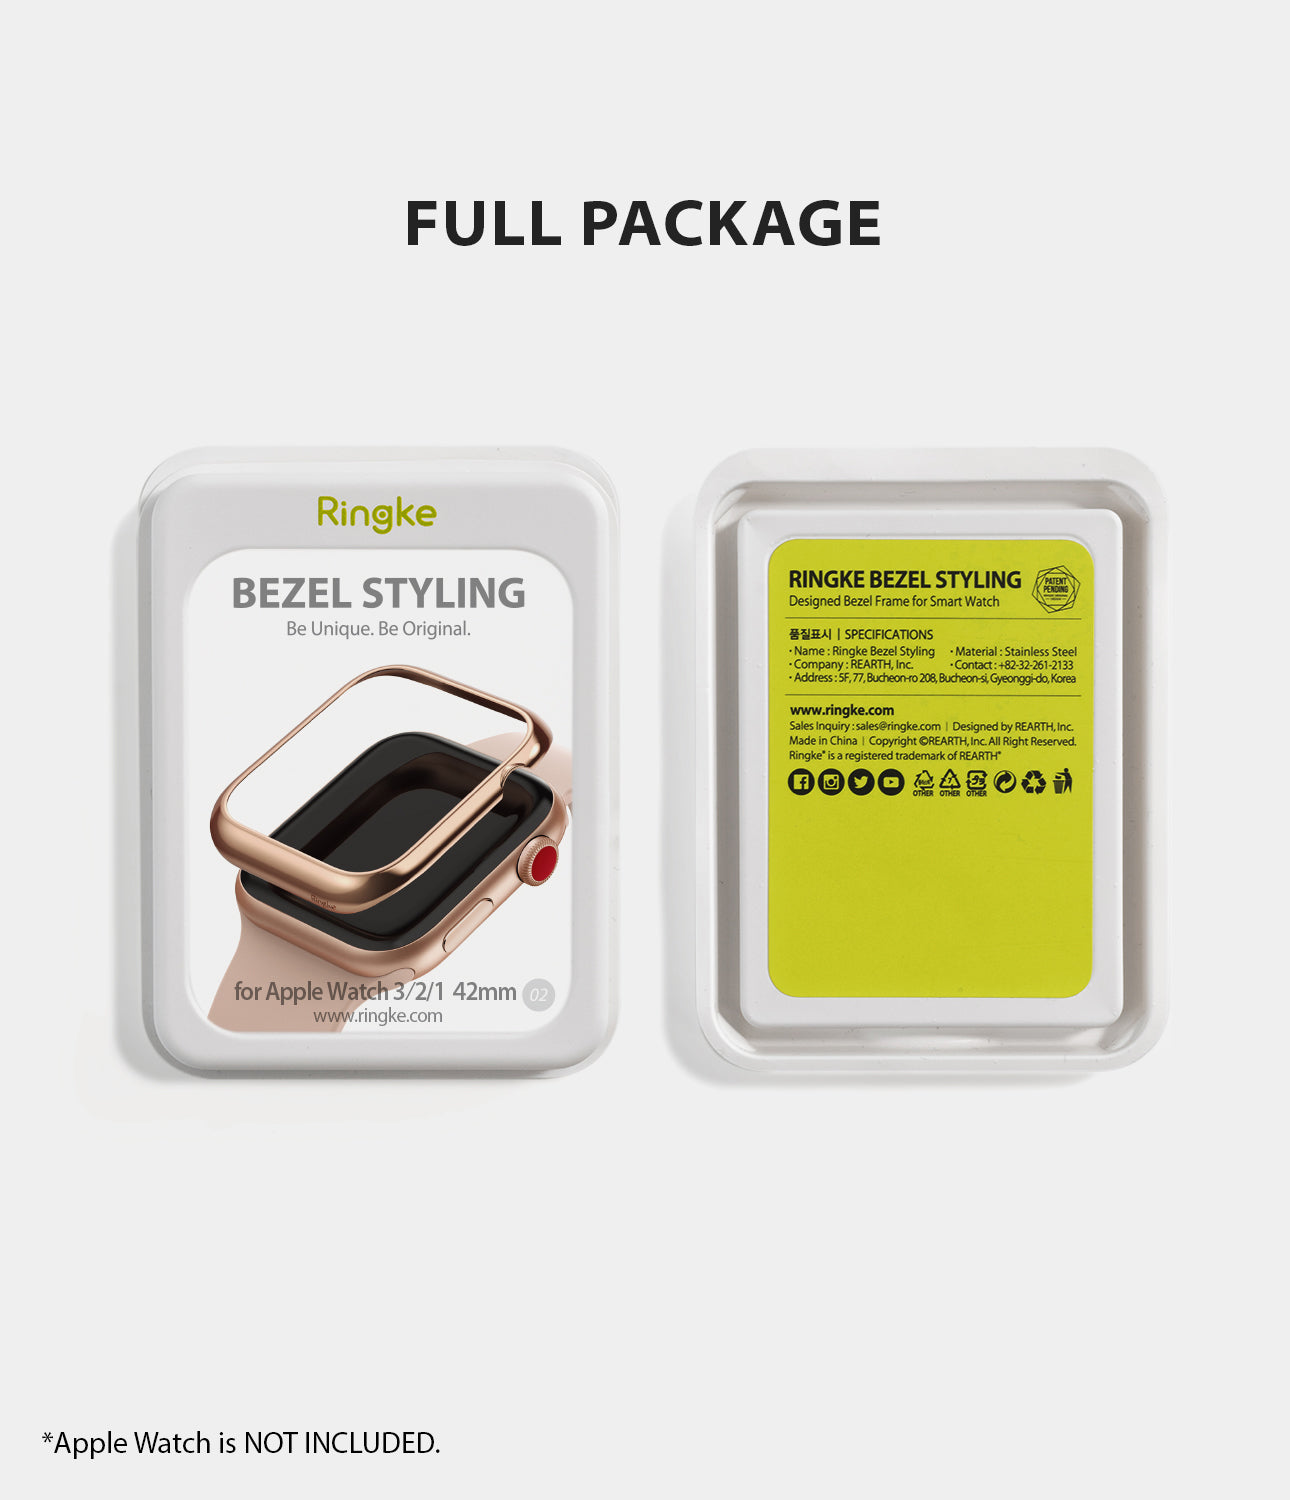 apple watch 3 2 1 42mm case ringke bezel styling stainless steel frame cover 42-02 full package